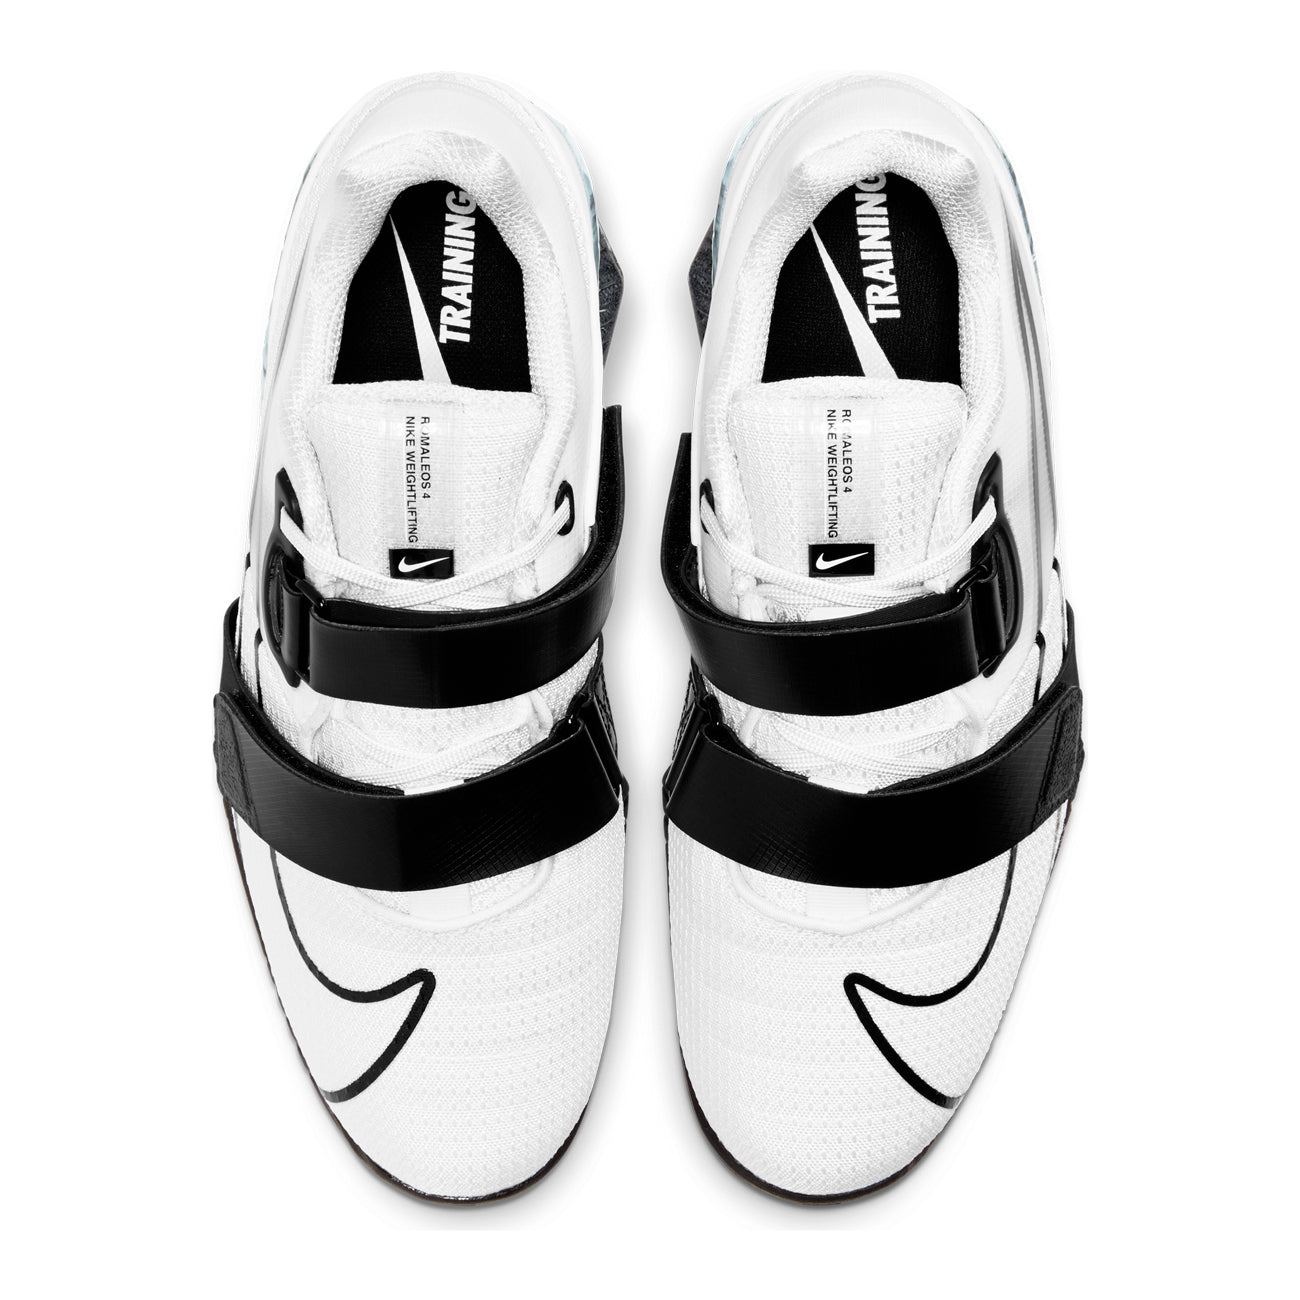 
                  
                    Nike Romaleos 4, nike, romaleos, 4, weightlifting, crossfit, gym, shoe, color, new, white, black
                  
                